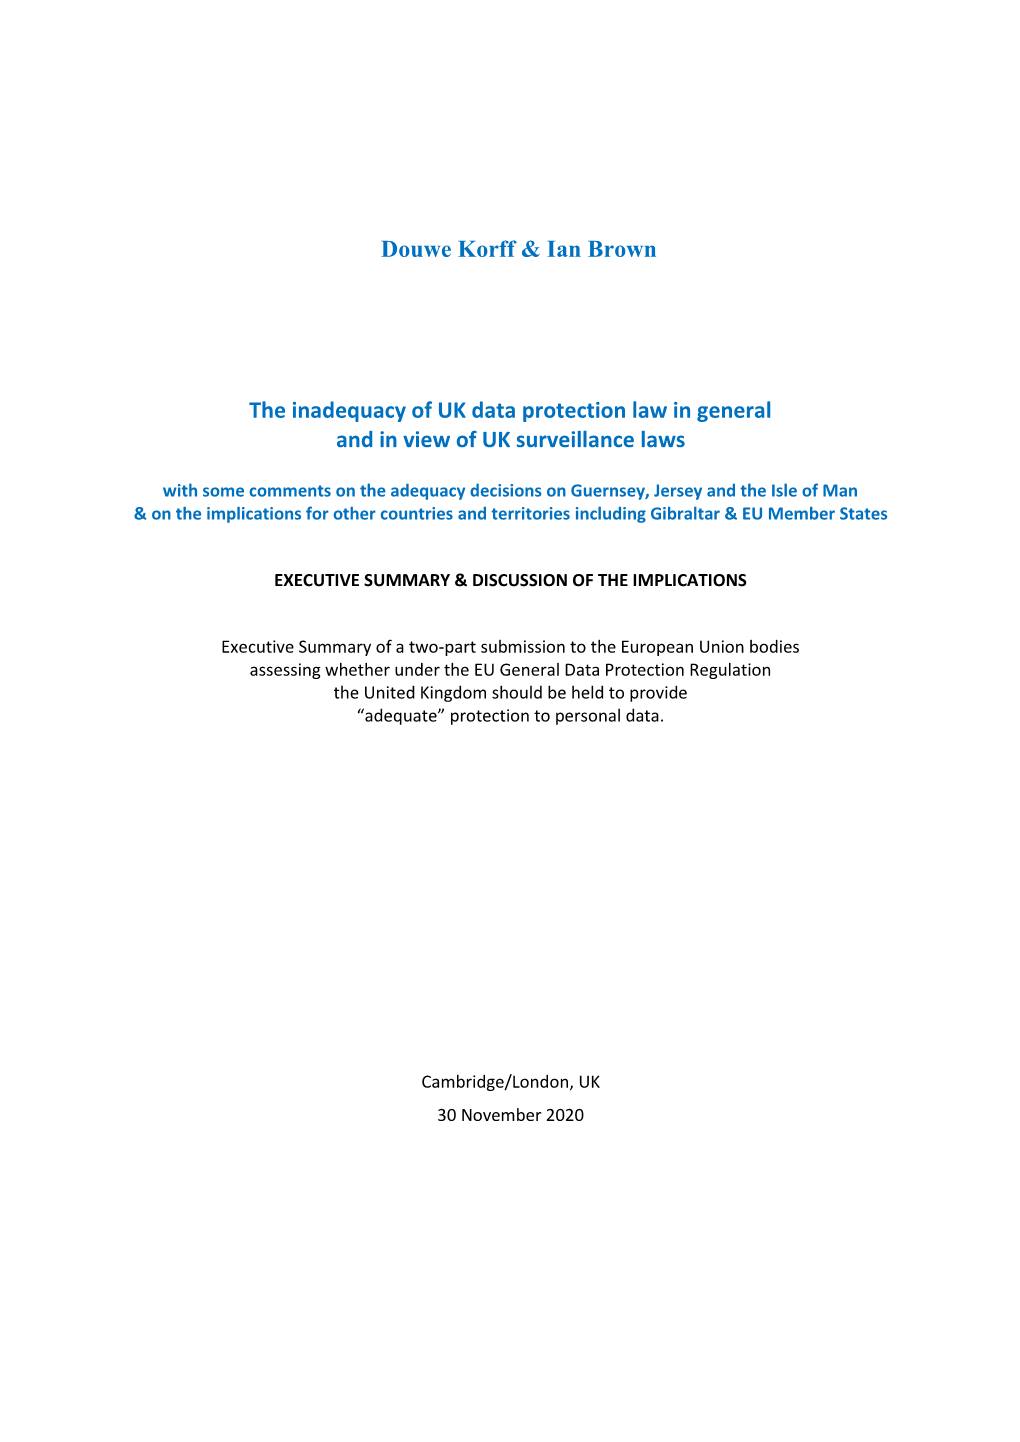 Douwe Korff & Ian Brown the Inadequacy of UK Data Protection